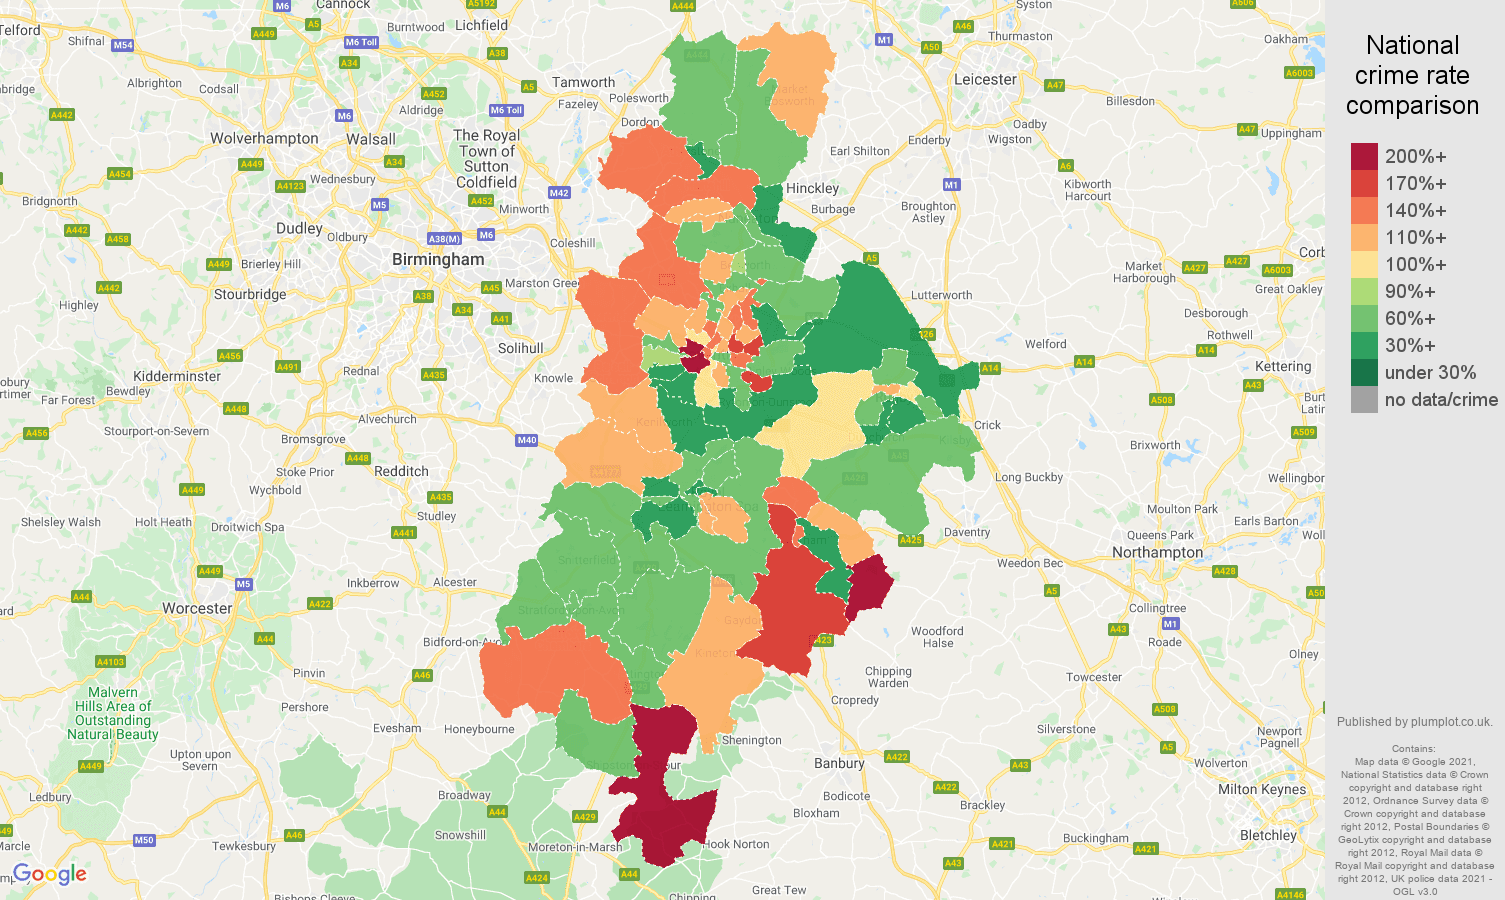 Coventry burglary crime rate comparison map